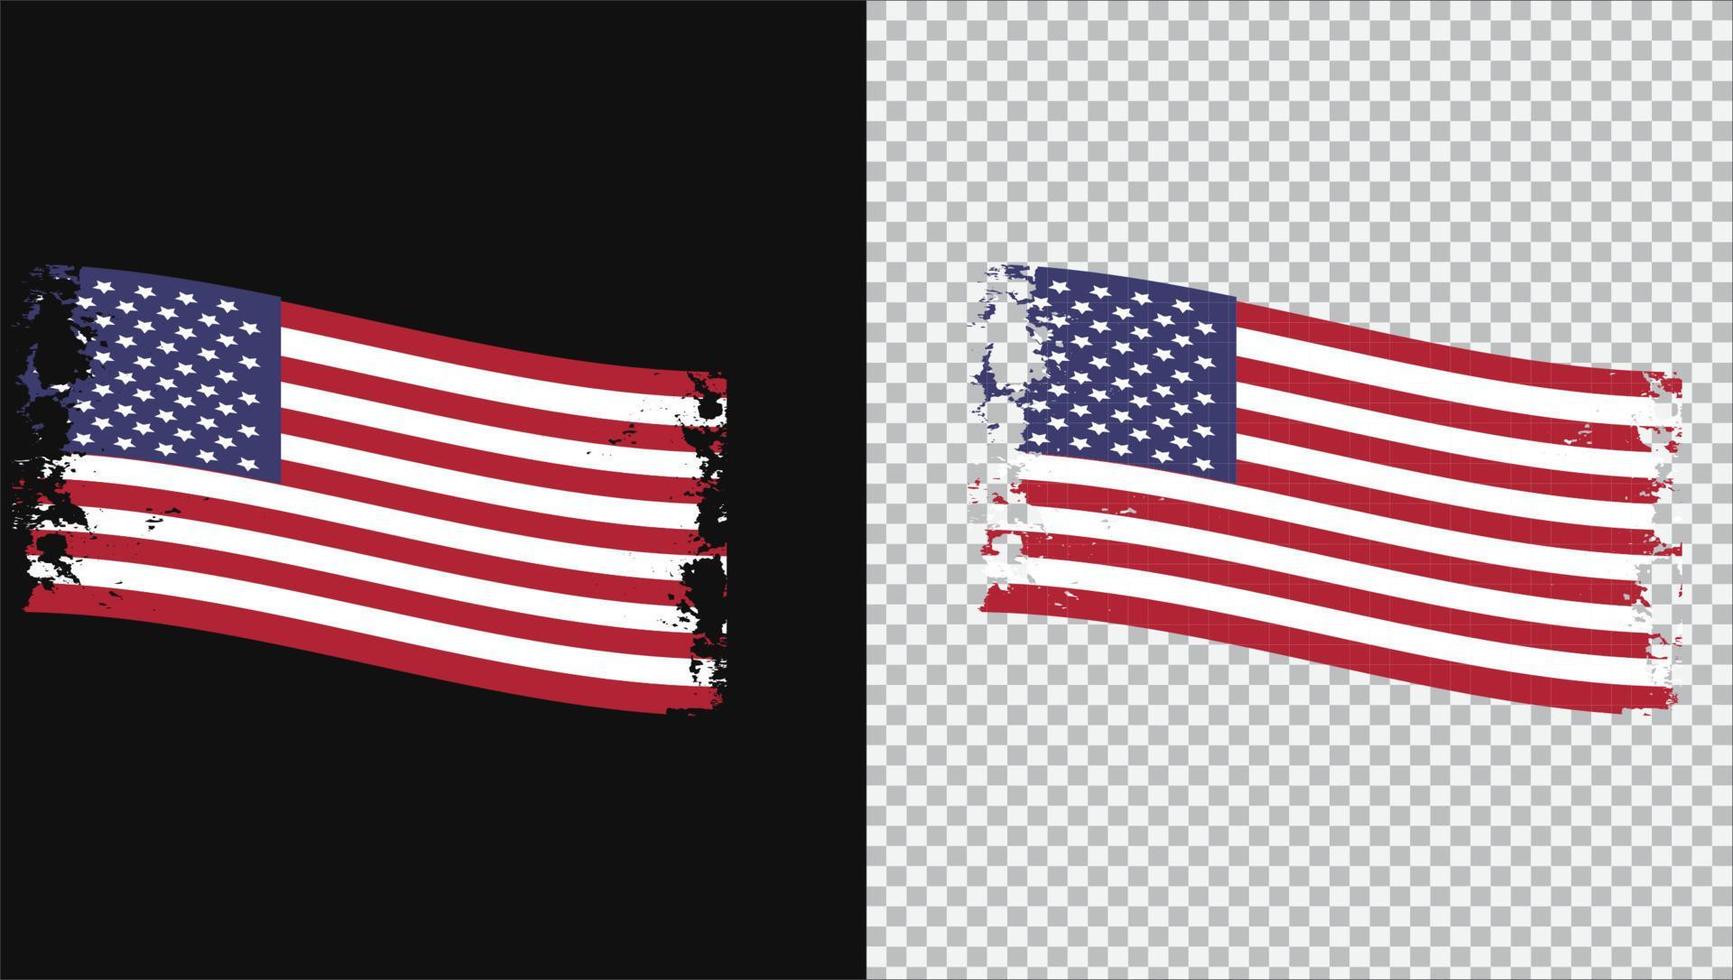 United States Country Wavy Flag Grunge Brush vector